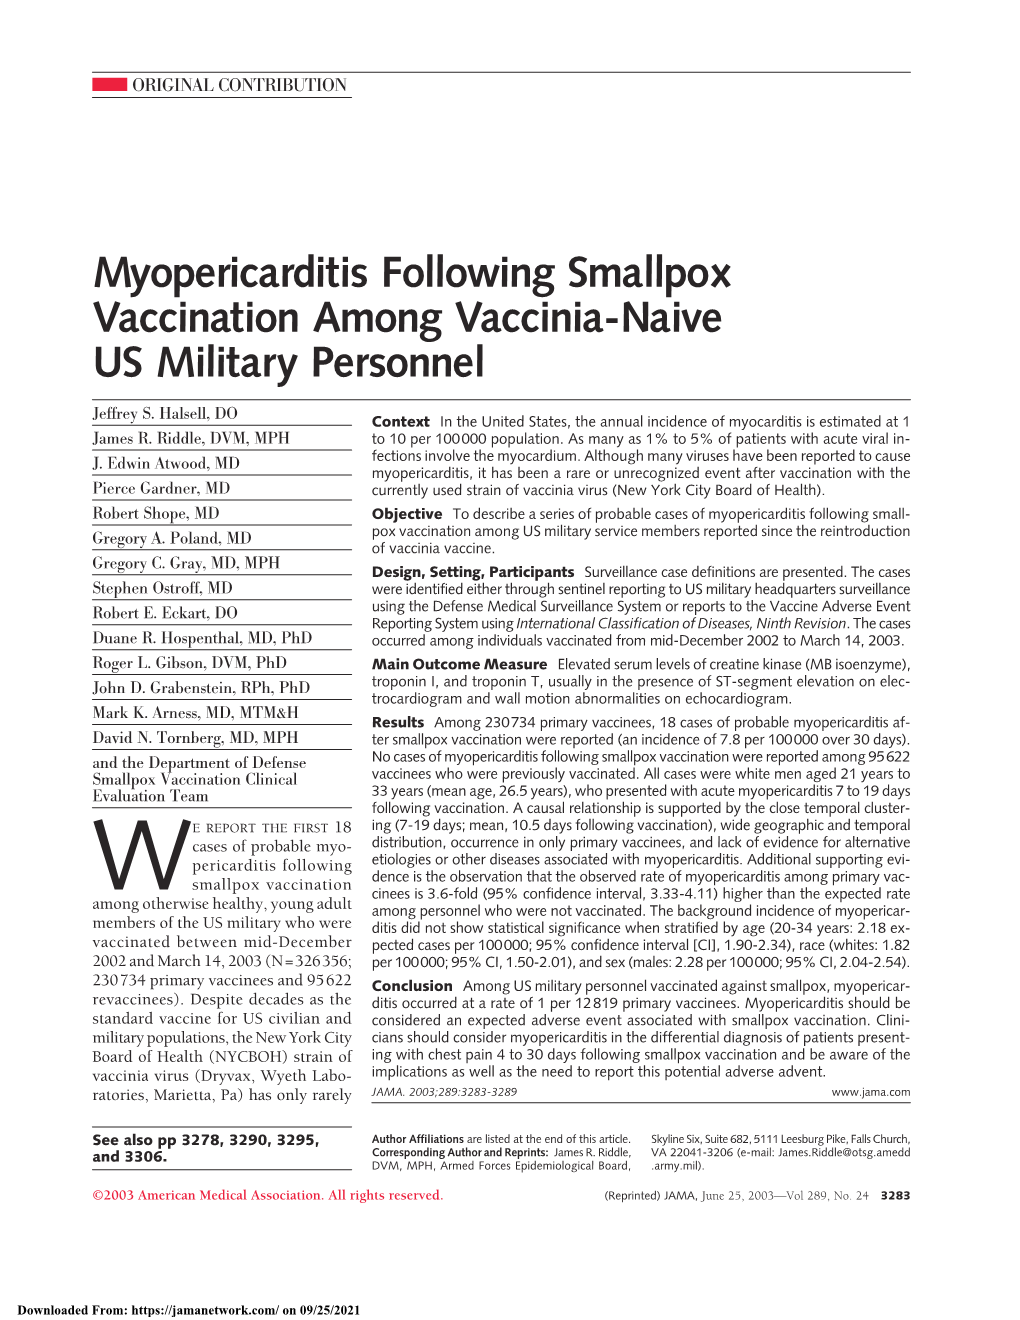 Myopericarditis Following Smallpox Vaccination Among Vaccinia-Naive US Military Personnel